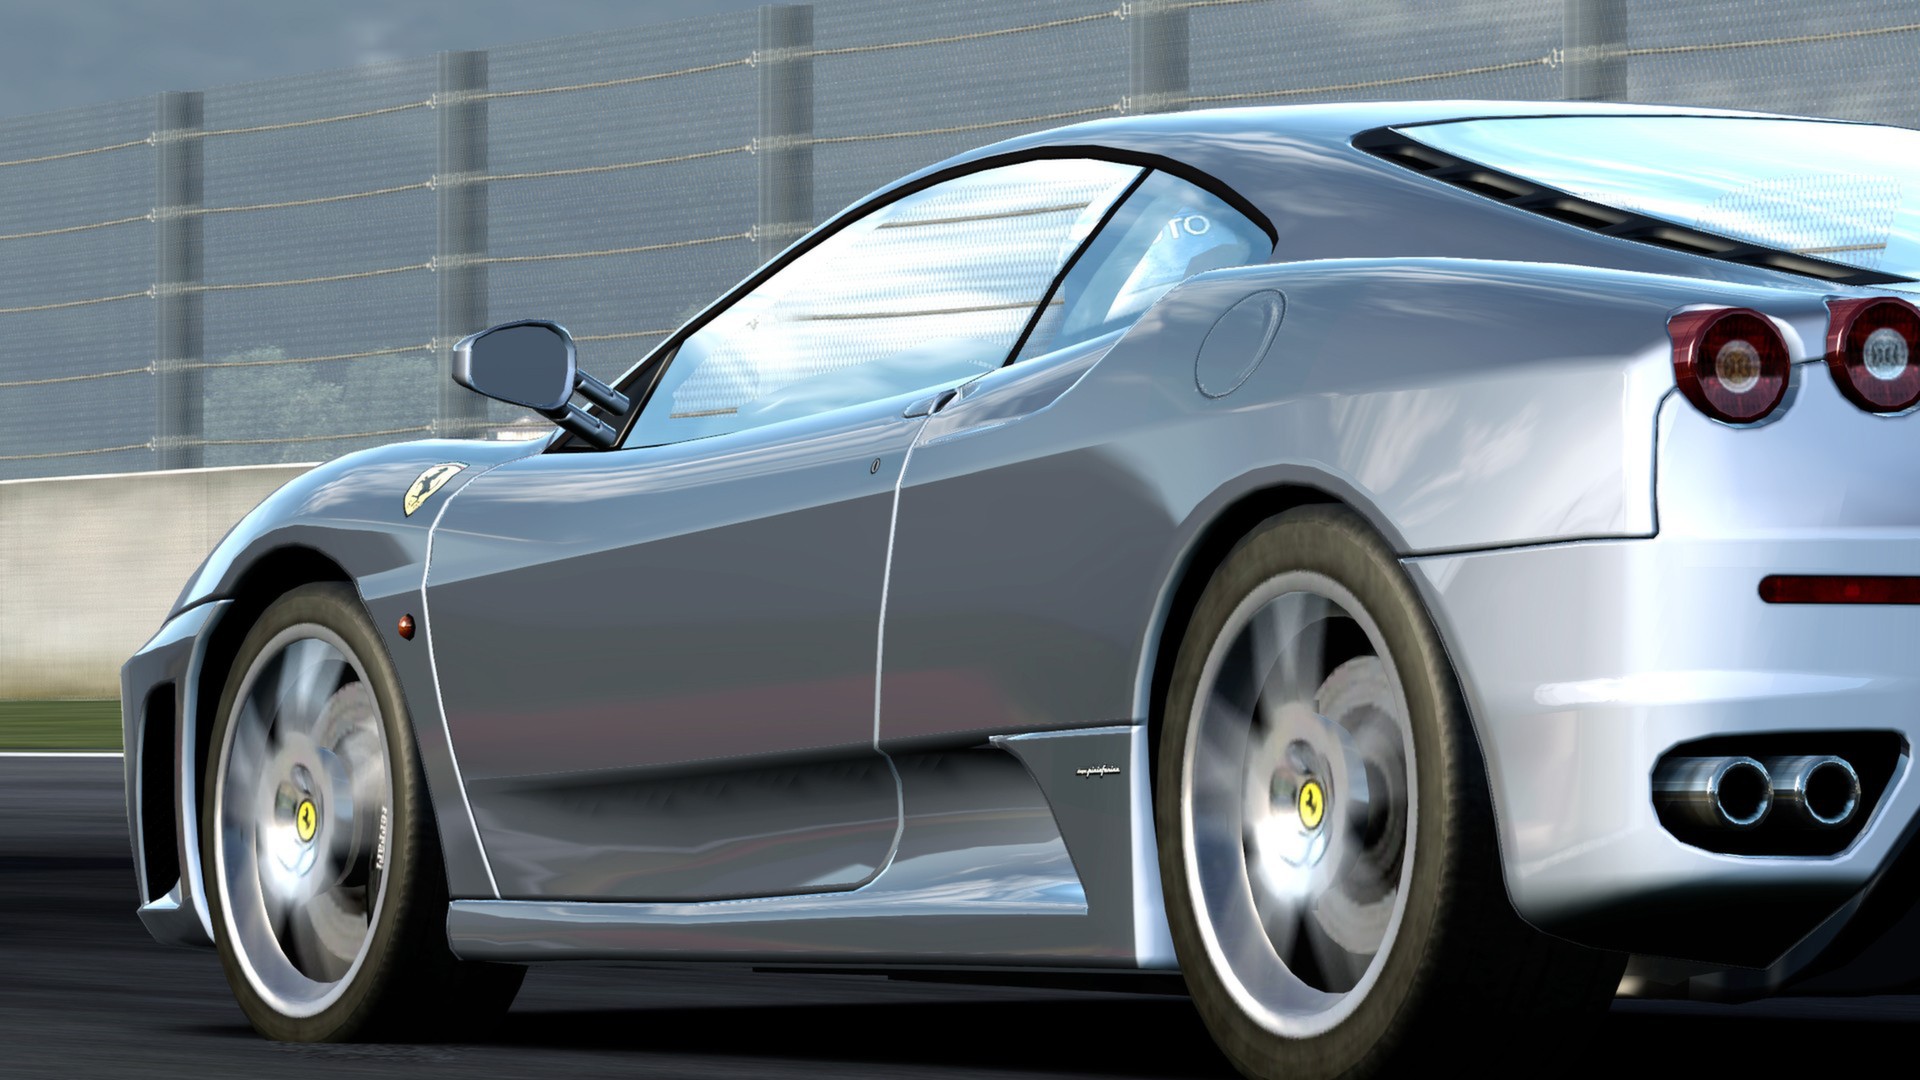 Ferrari race legends. Test Drive: Ferrari Racing Legends. Test Drive Ferrari Racing Legends ps3. Test Drive: Ferrari Racing Legends Xbox 360.